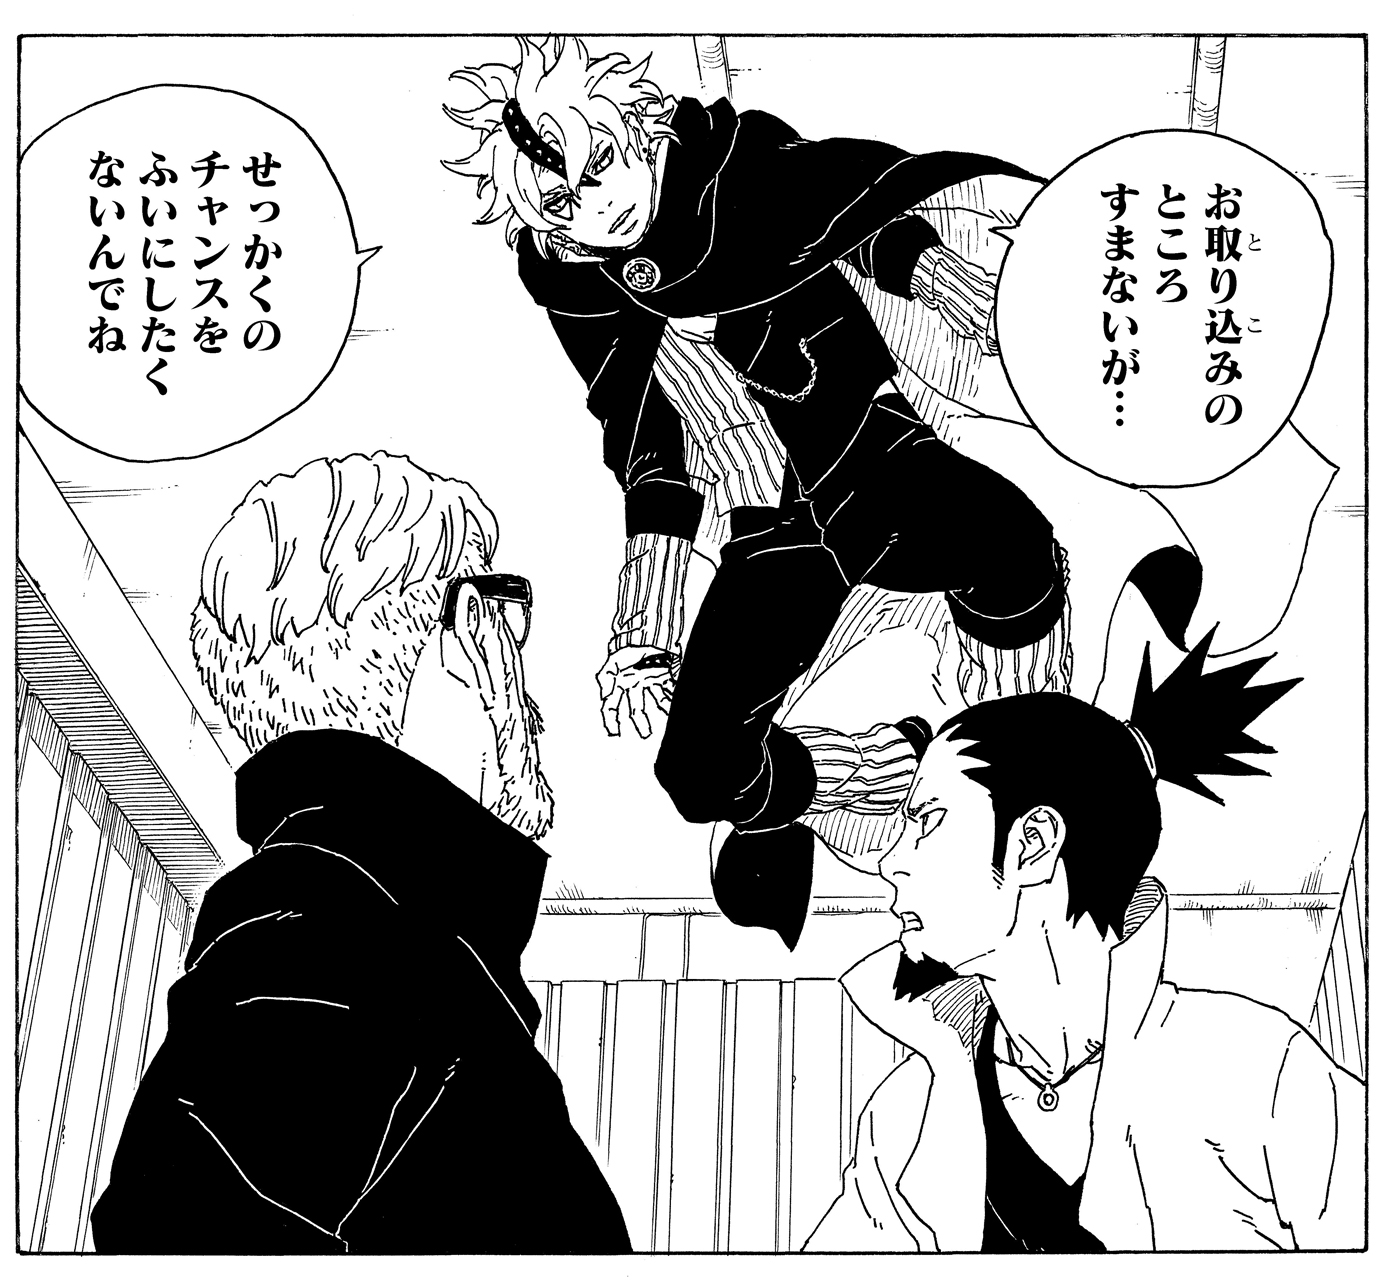  Boruto: Naruto Next Generations, Vol. 18 (18